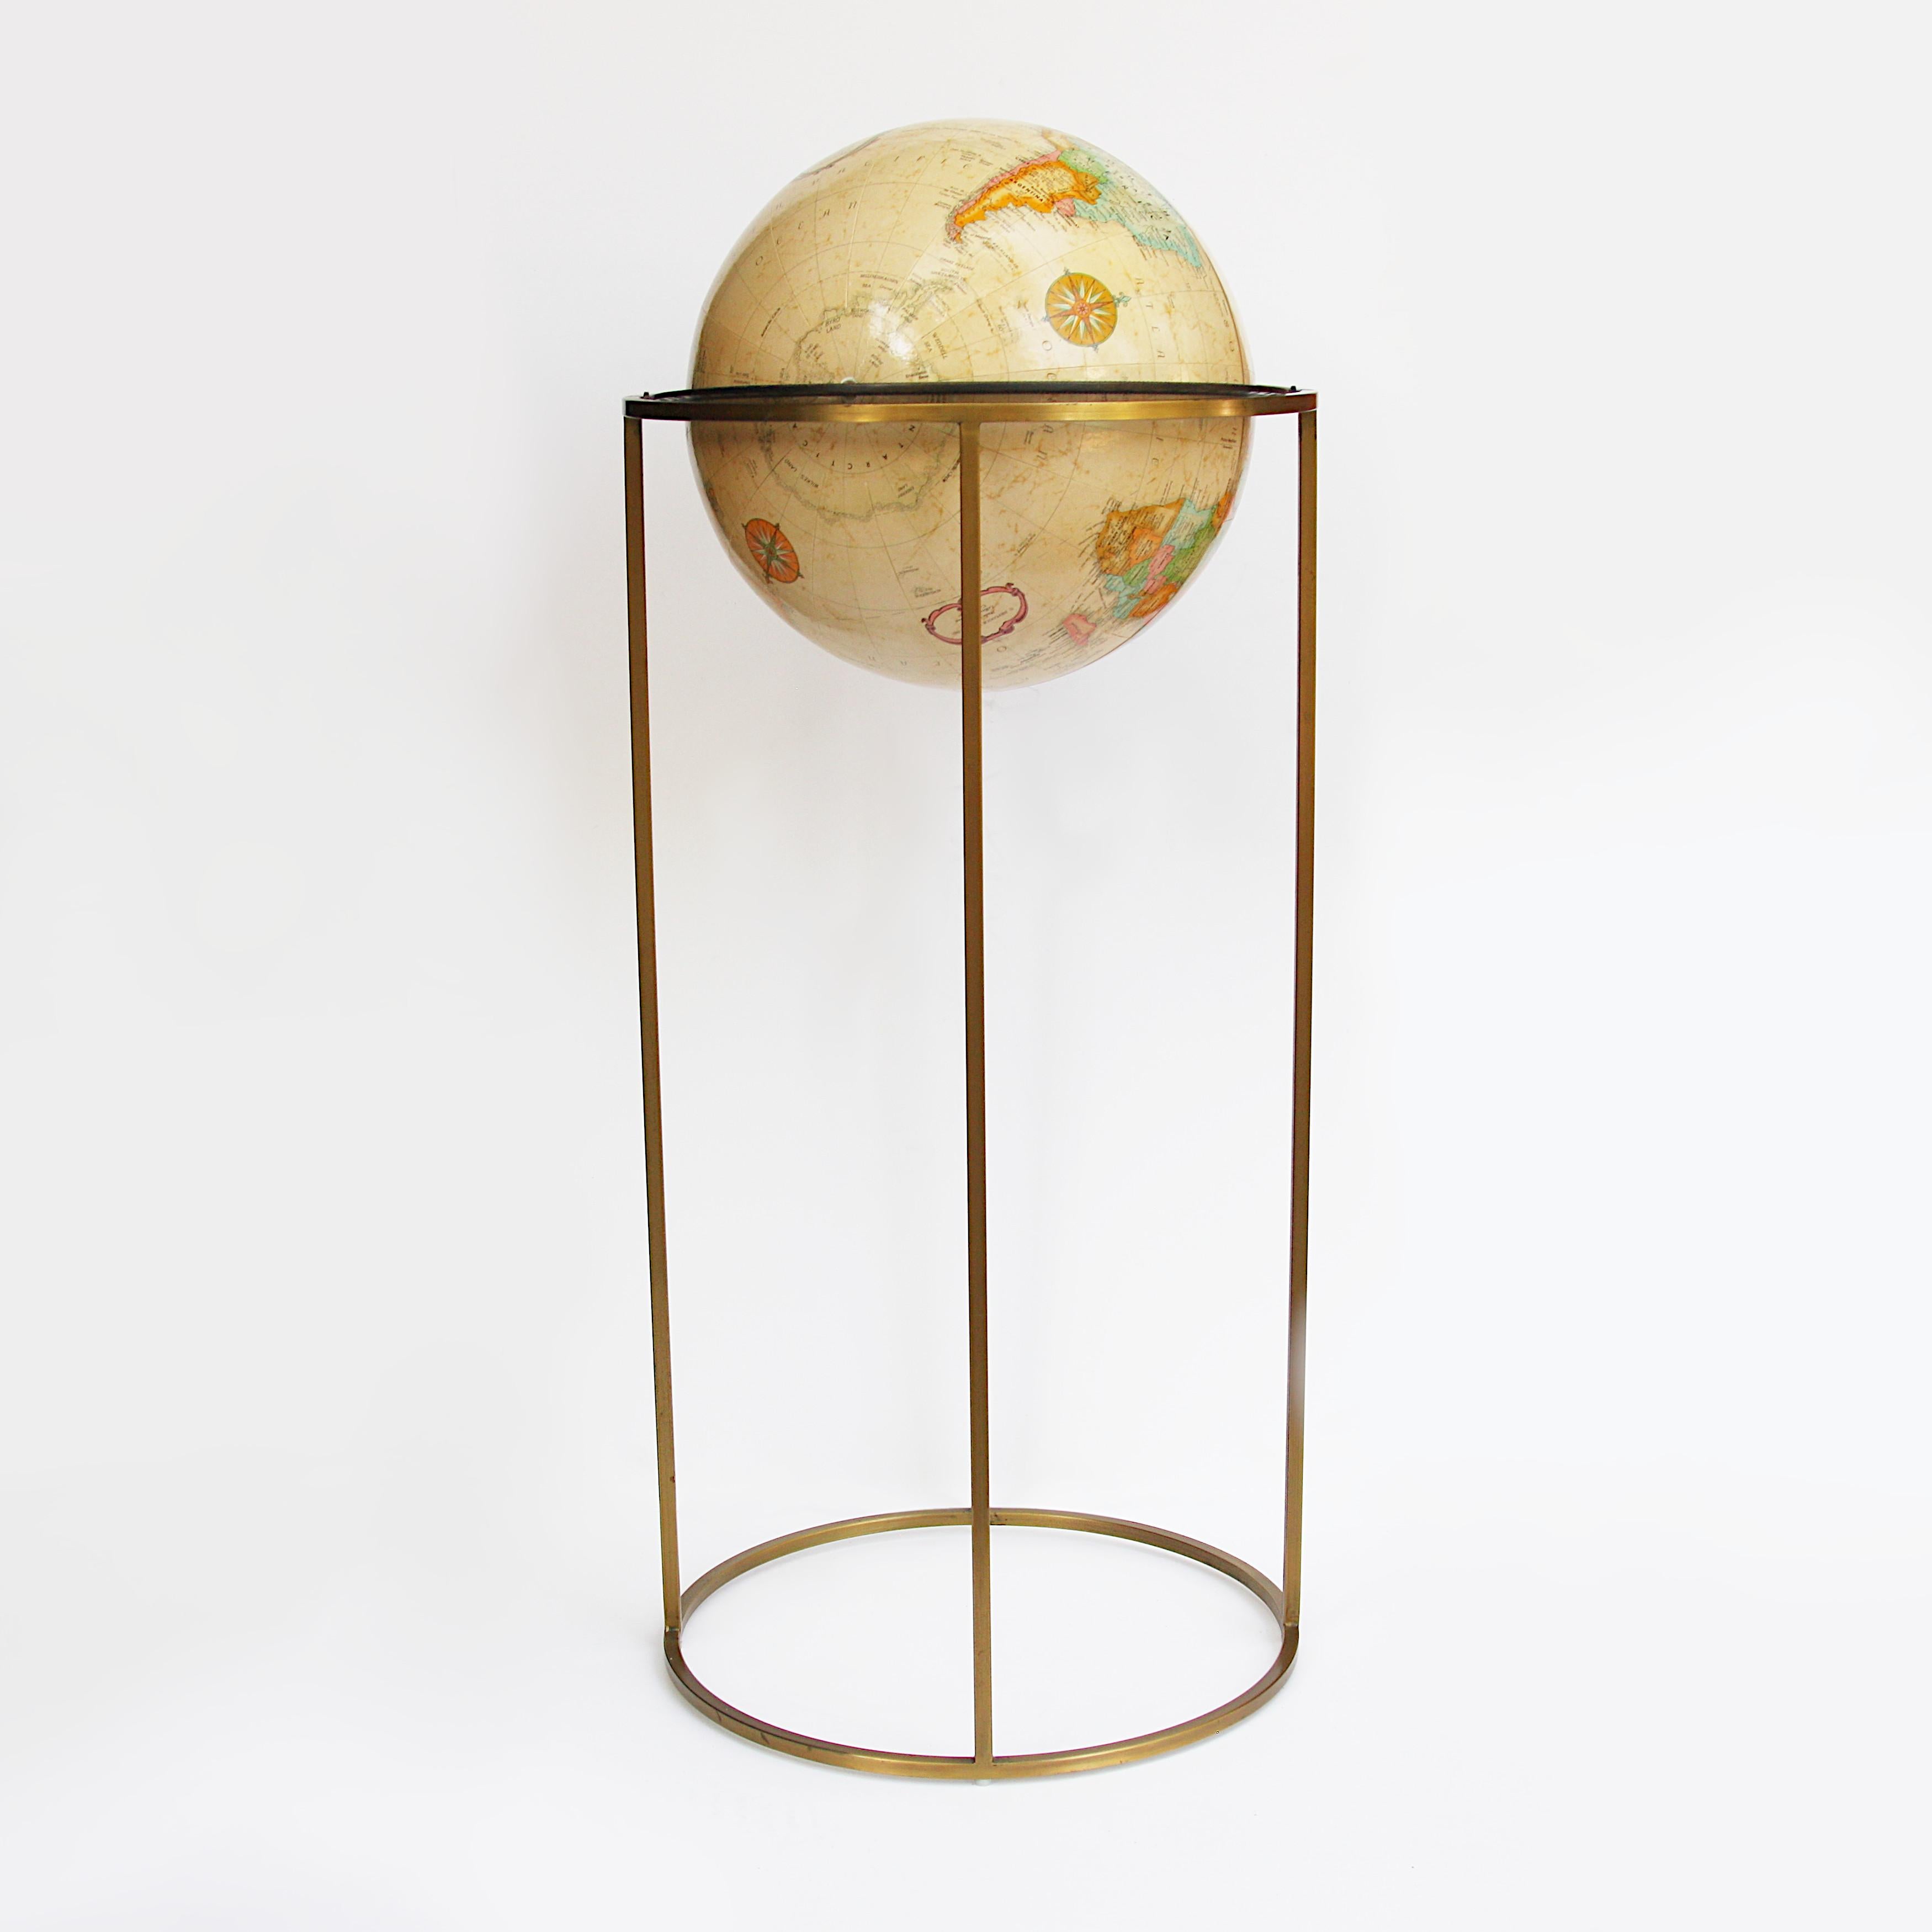 North American Vintage 1960s Mid-Century Modern Brass Globe by Replogle in Style of Paul Mccobb